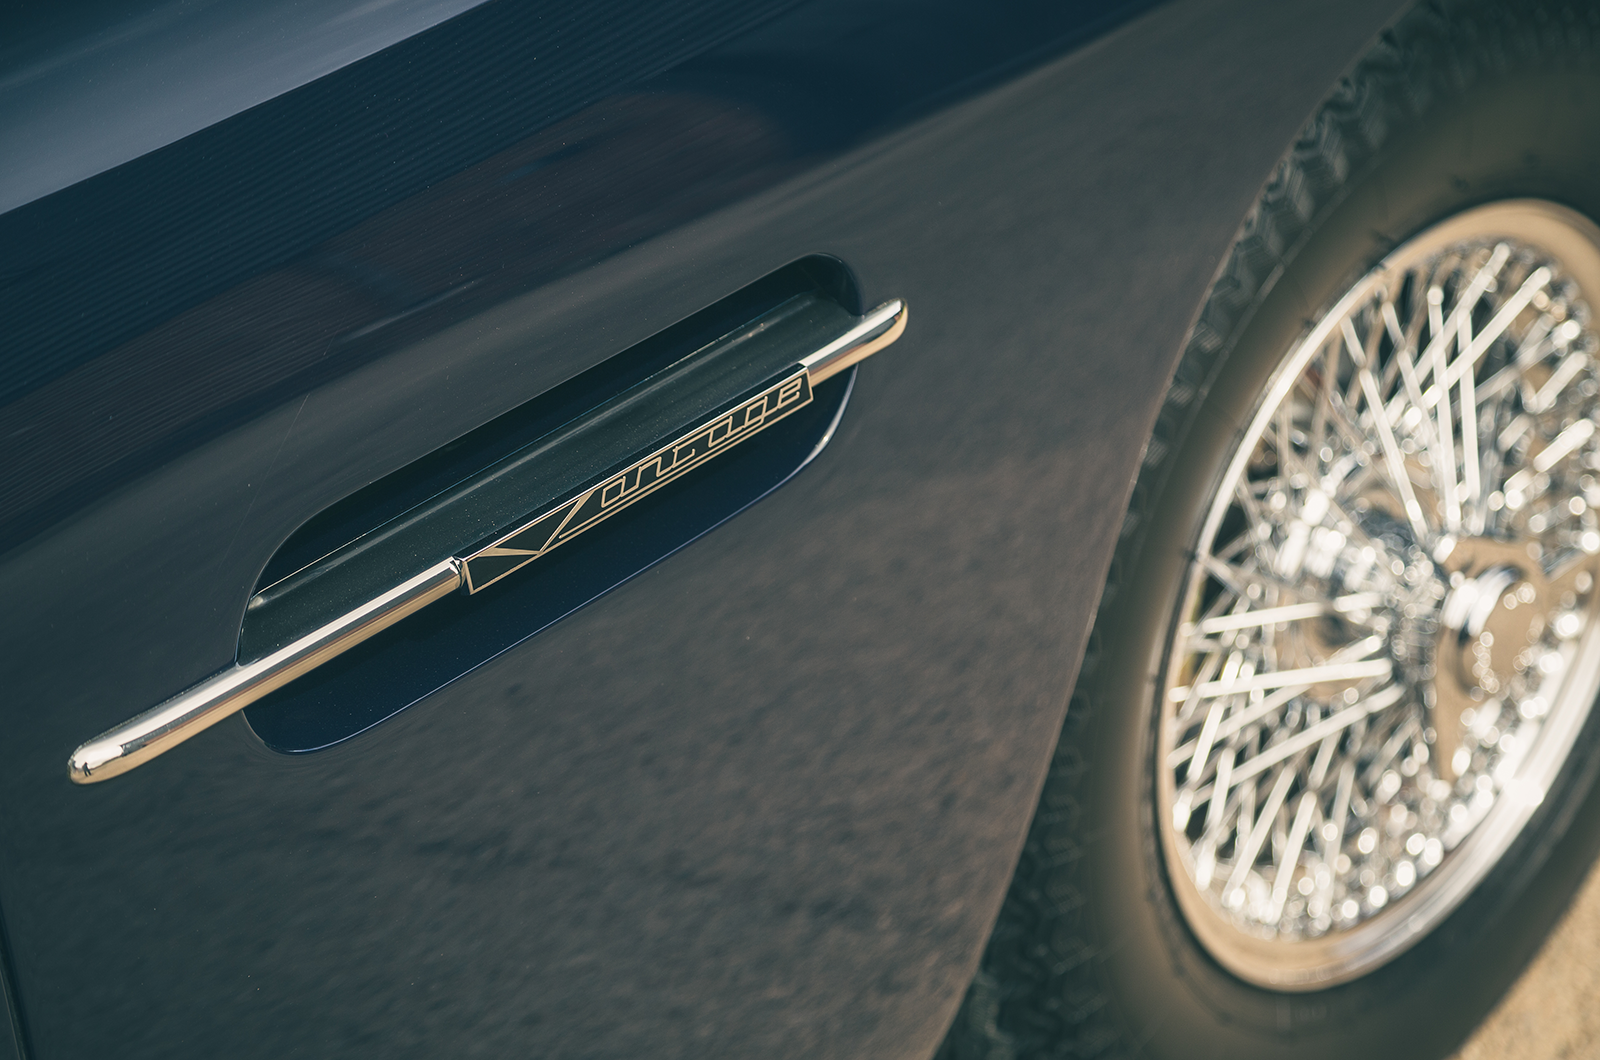 Classic & Sports Car – Aston Martin DB5: classic car royalty